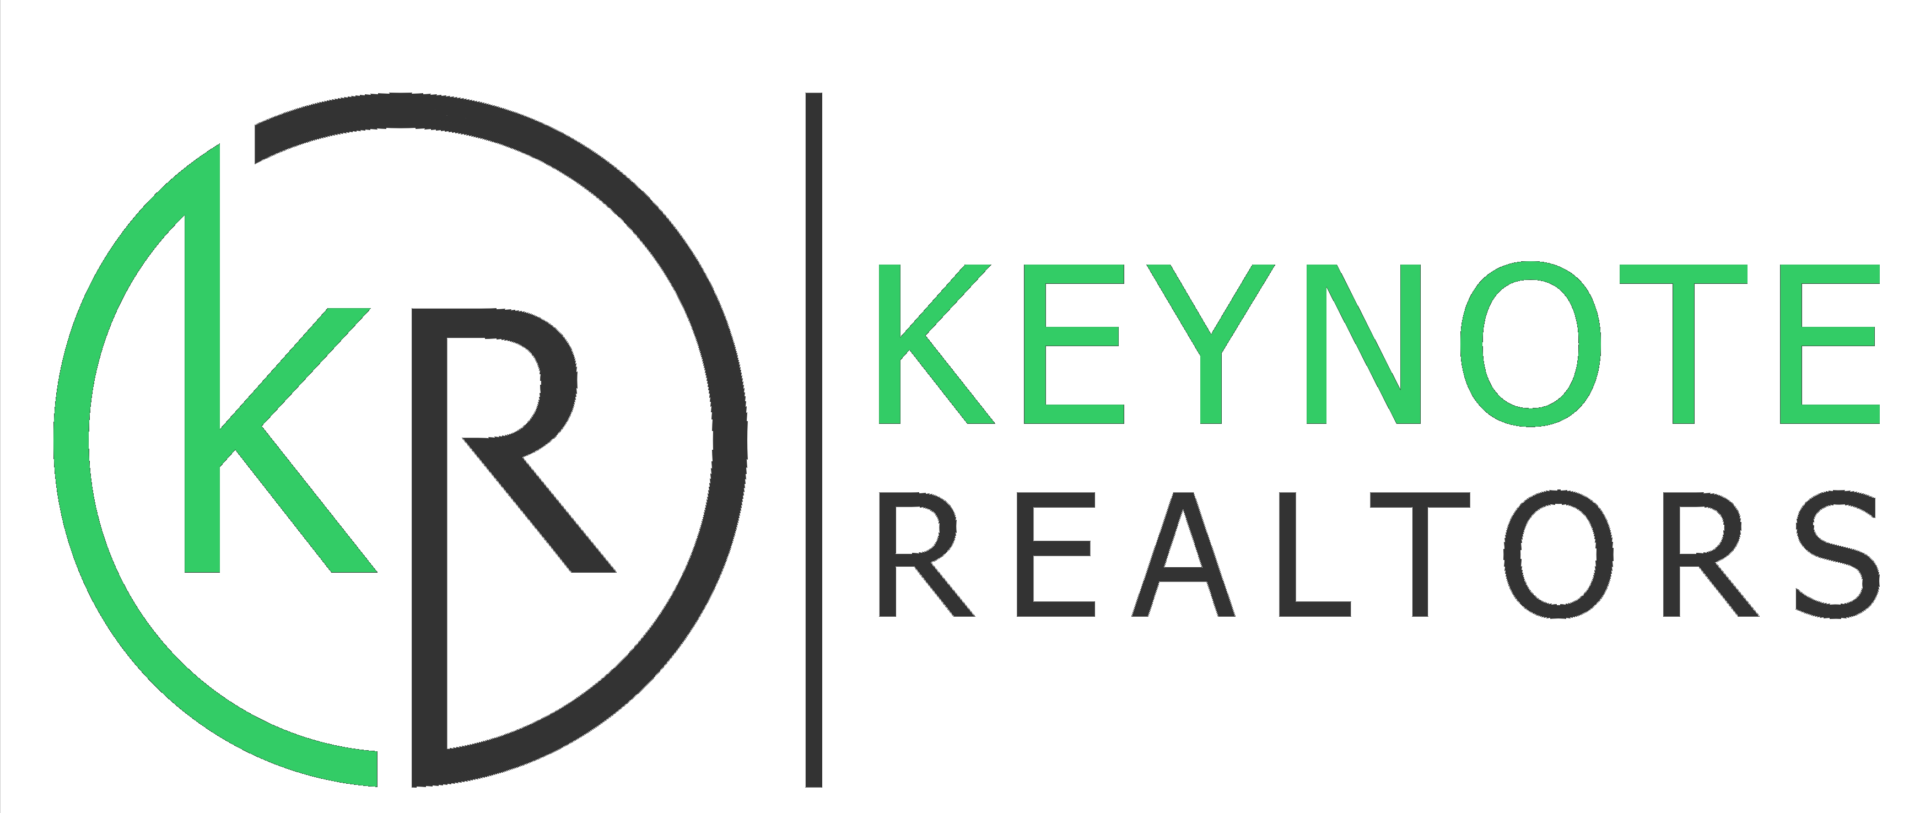 Keynote Realtors logo